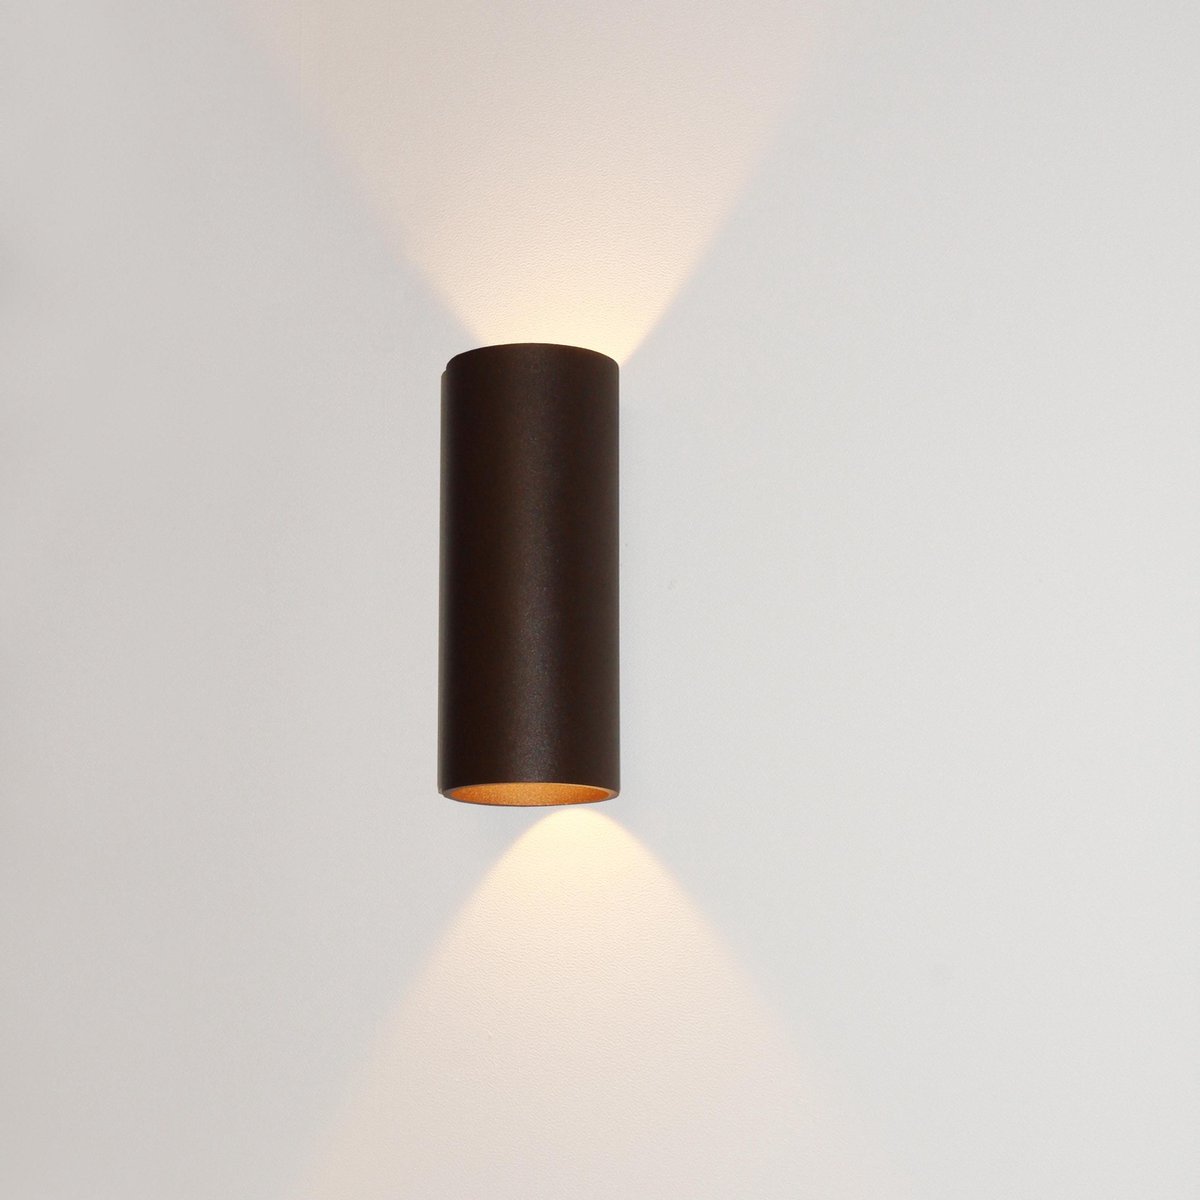 Wandlamp Brody 2 Bruin - Ø7,2cm - LED 2x4W 2700K 2x360lm - IP54 - Dimbaar > wandlamp binnen bruin | wandlamp buiten bruin | wandlamp bruin | buitenlamp bruin | muurlamp bruin | led lamp bruin | sfeer lamp bruin | design lamp bruin